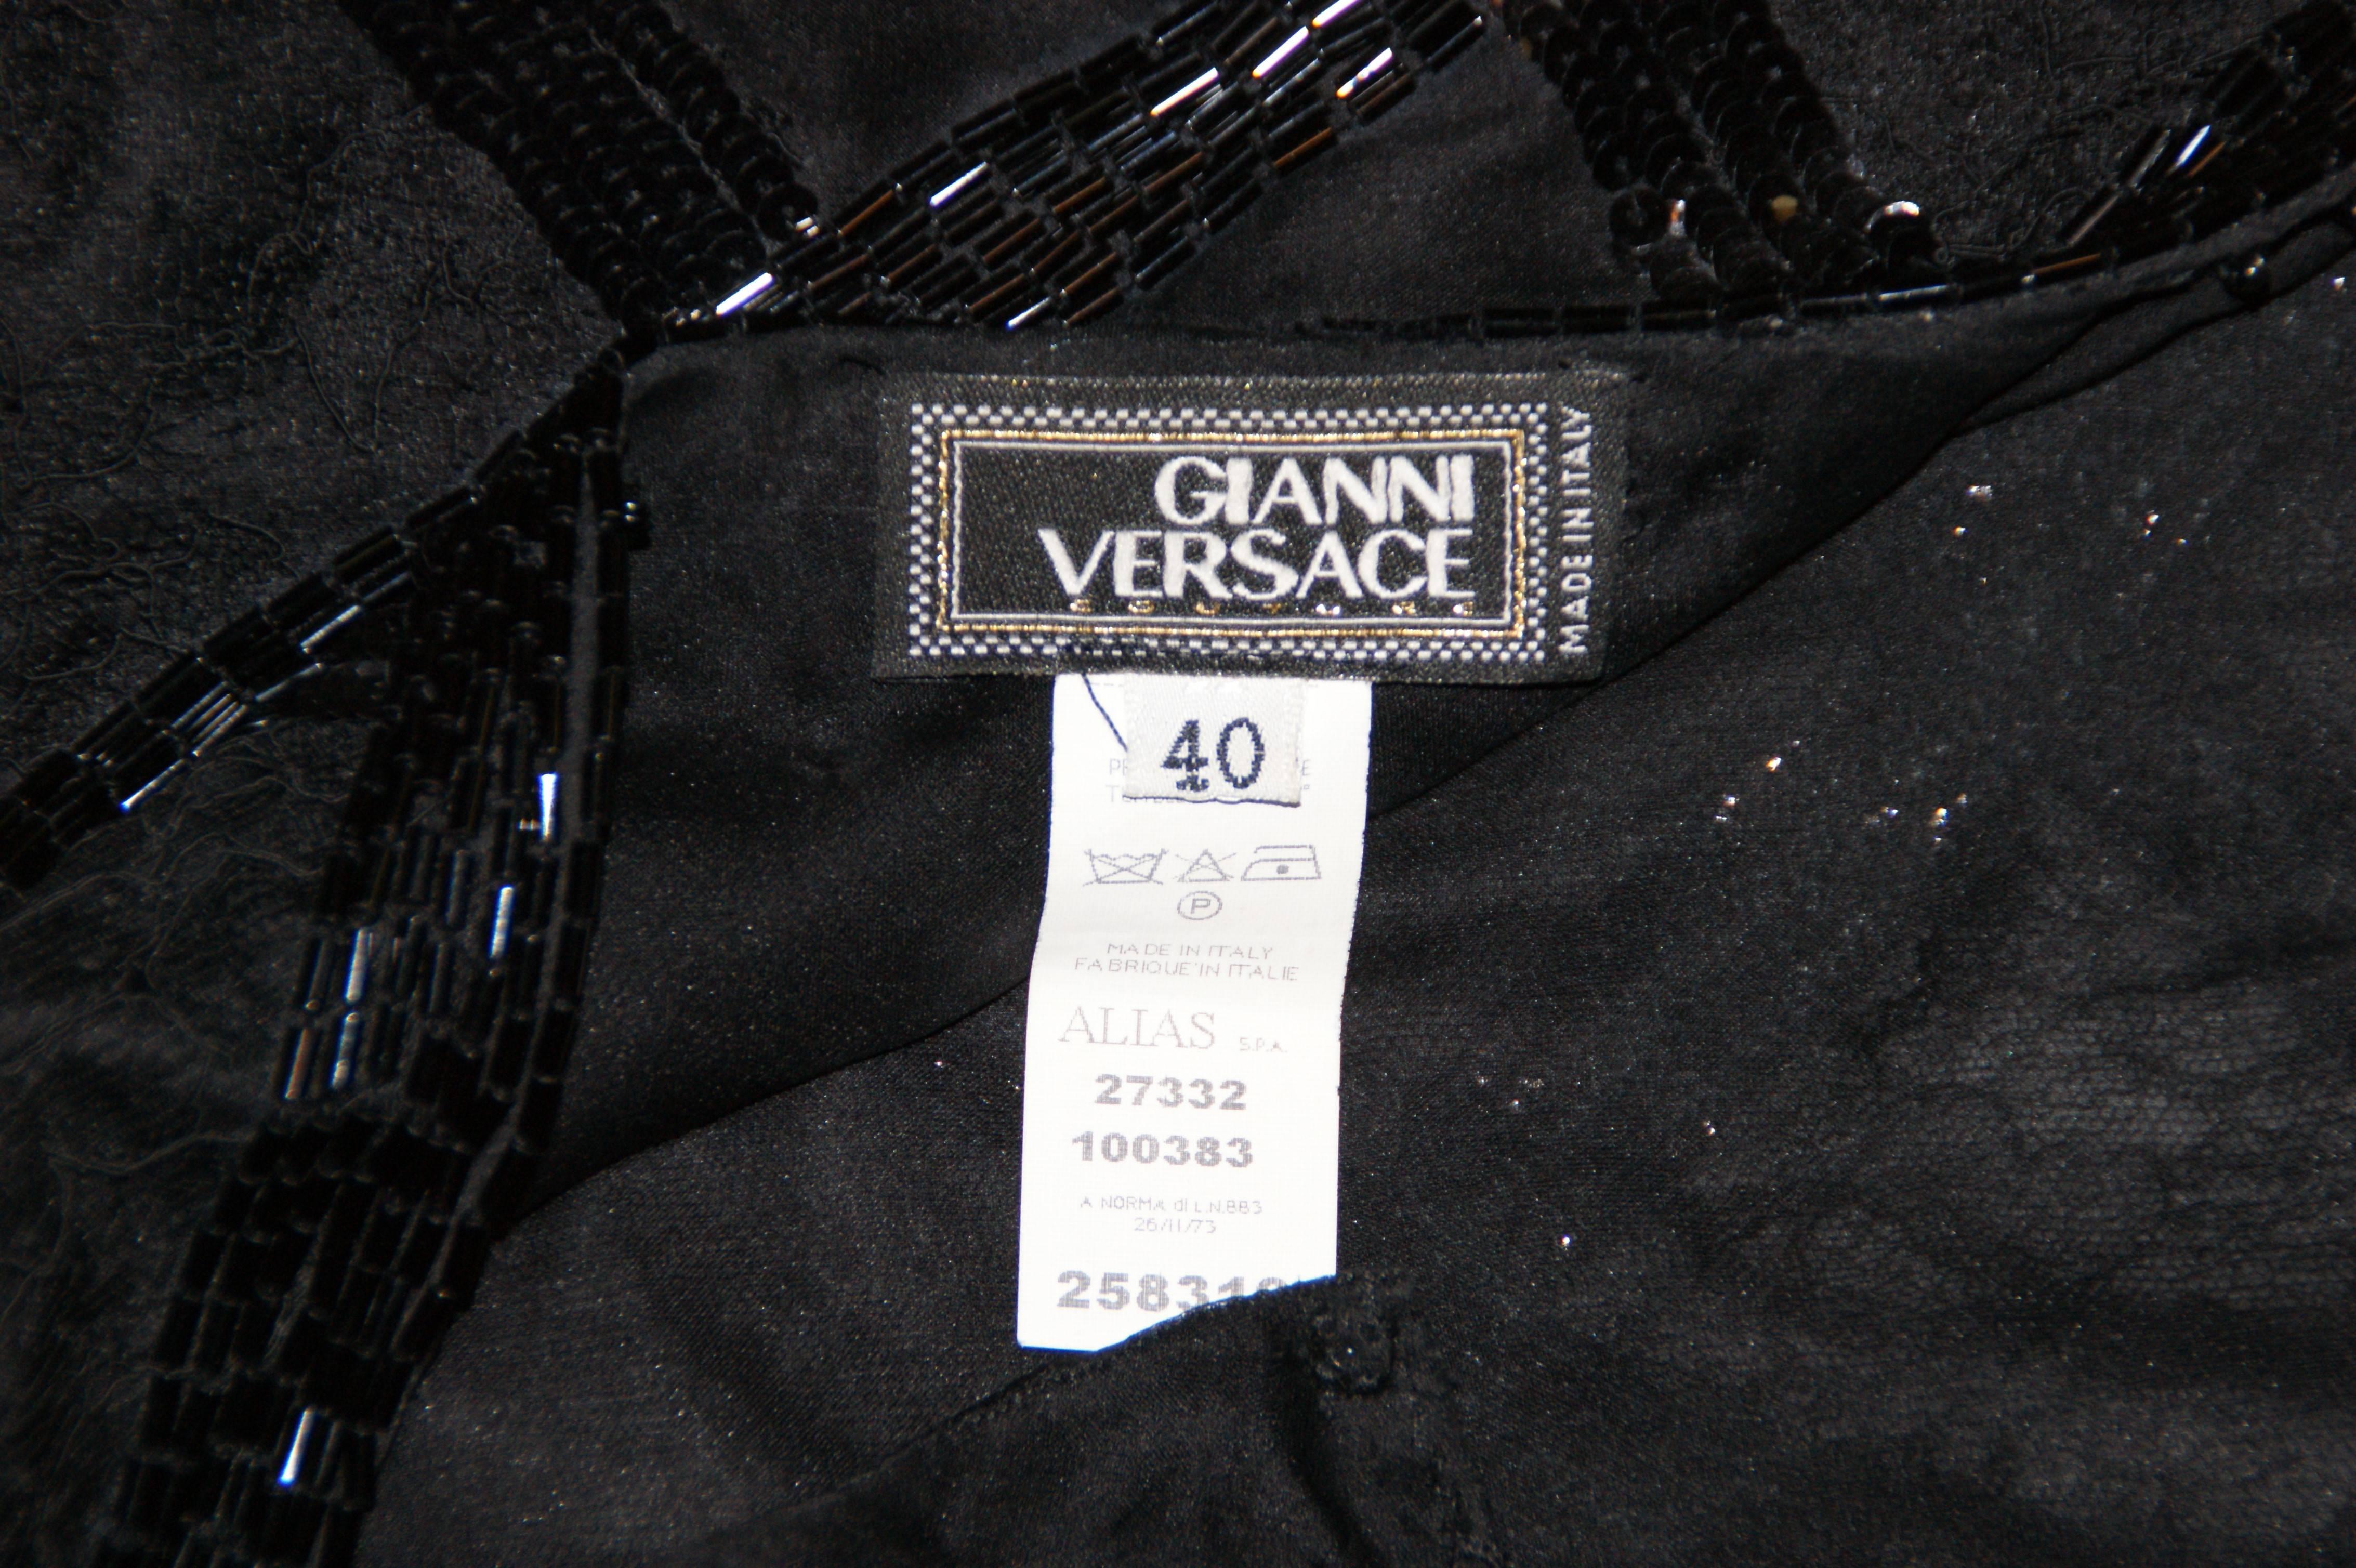 S/S 2003 Gianni Versace Couture Runway Black Silk Beaded 1920's Flapper Dress 40 3